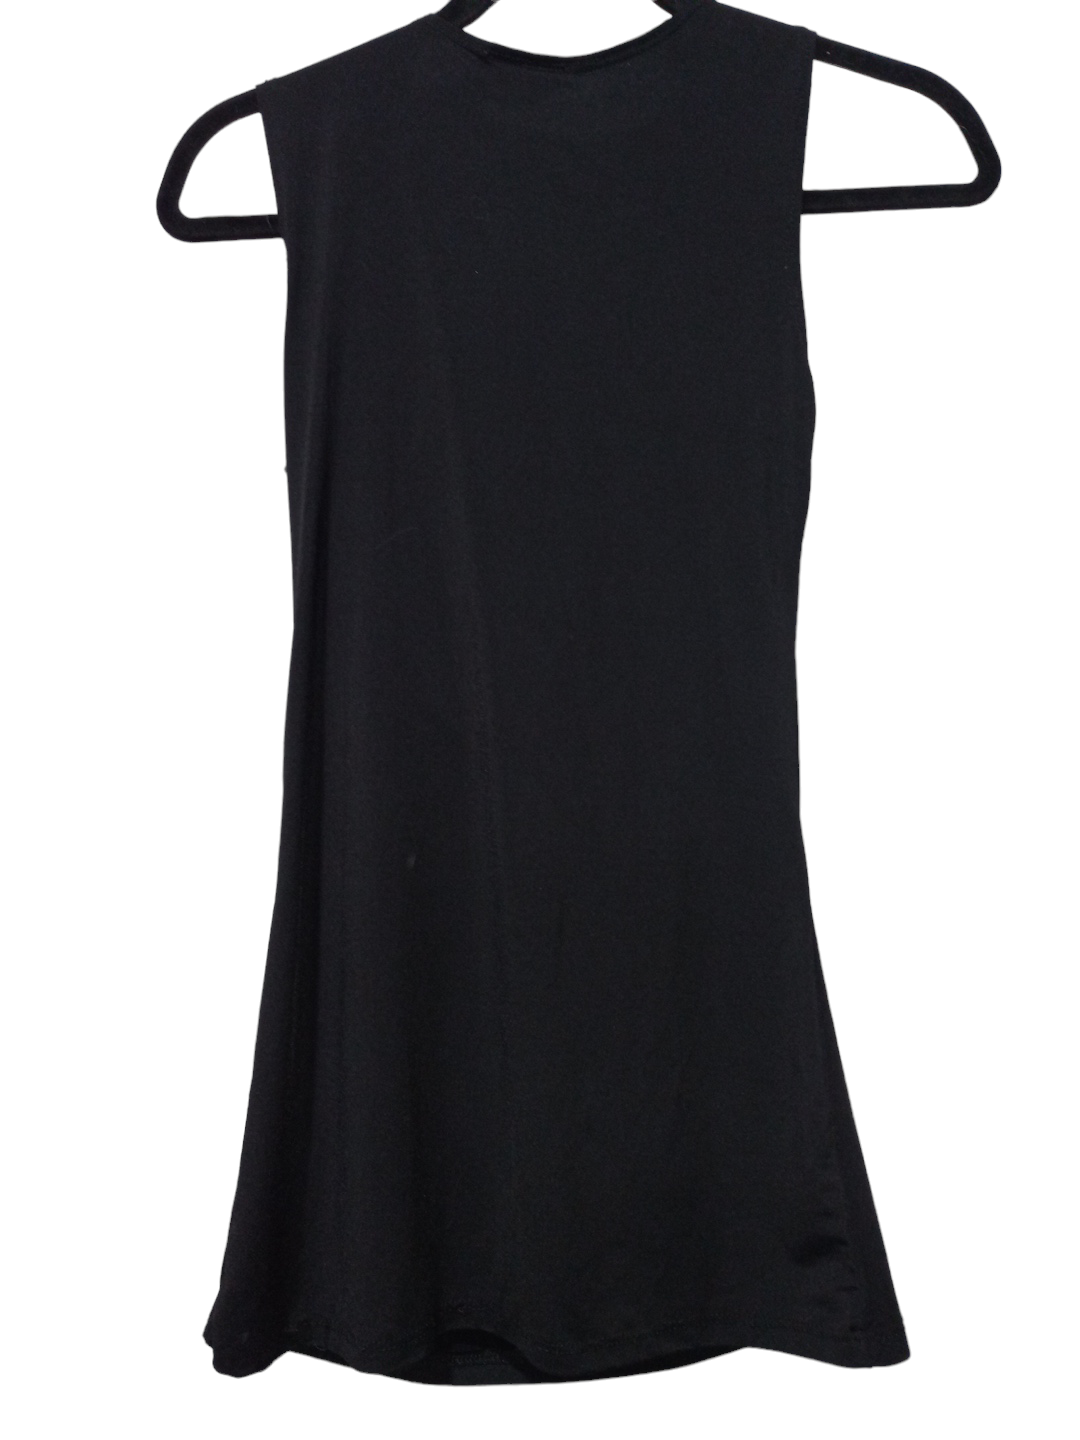 Black & White Blouse Sleeveless Clothes Mentor, Size M